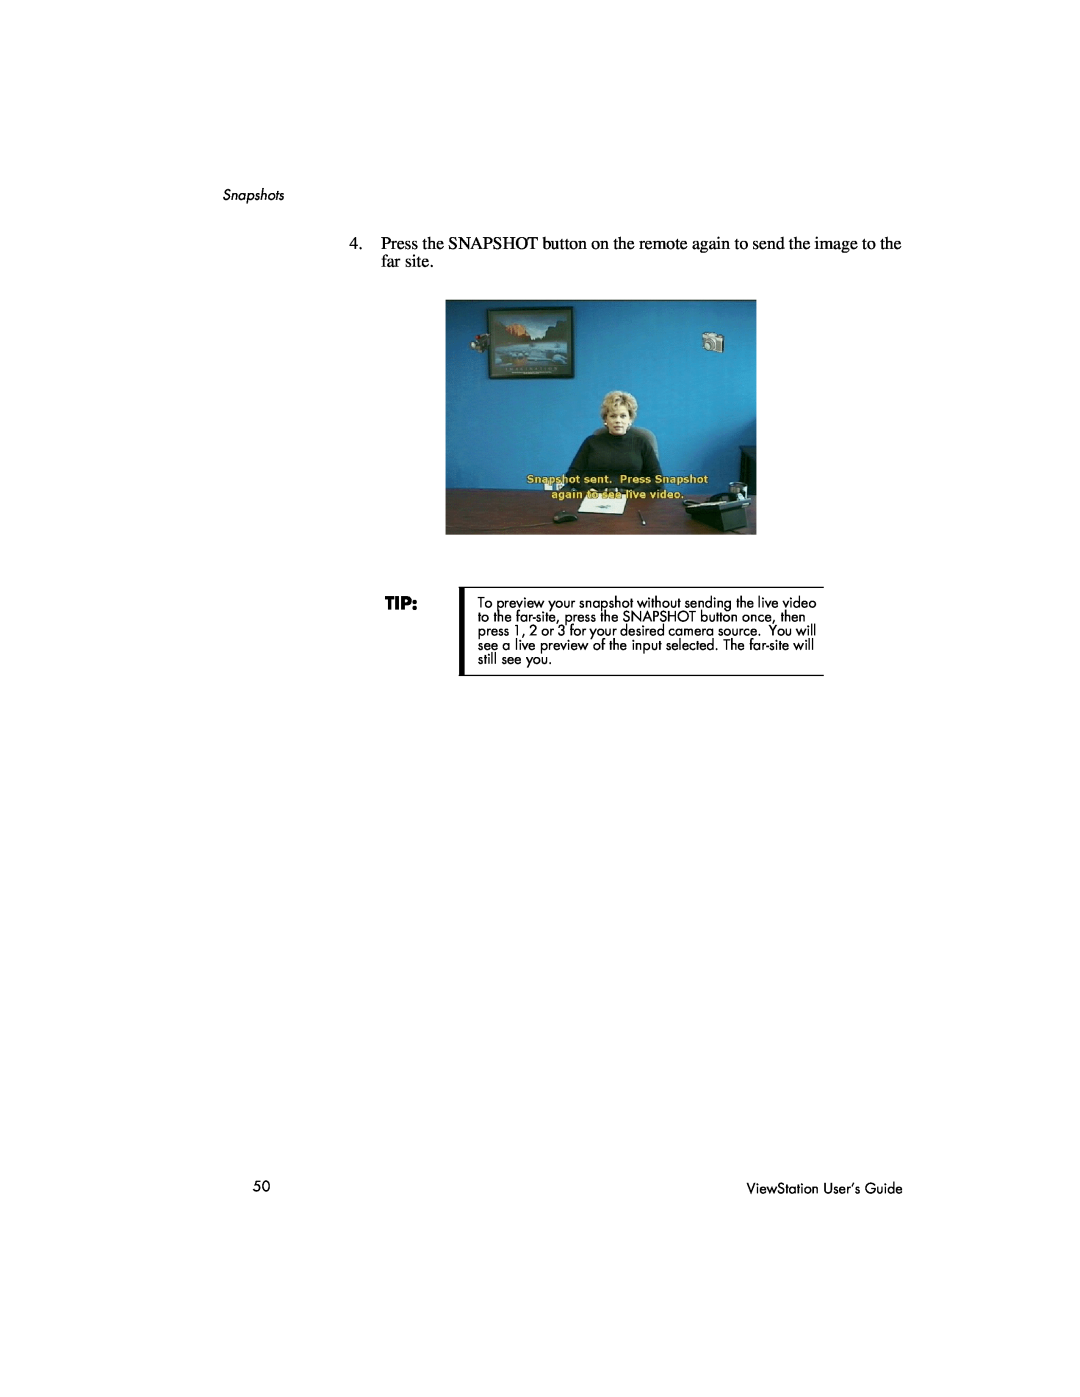 Polycom MP, 128, 512 manual Snapshots, ViewStation User’s Guide 